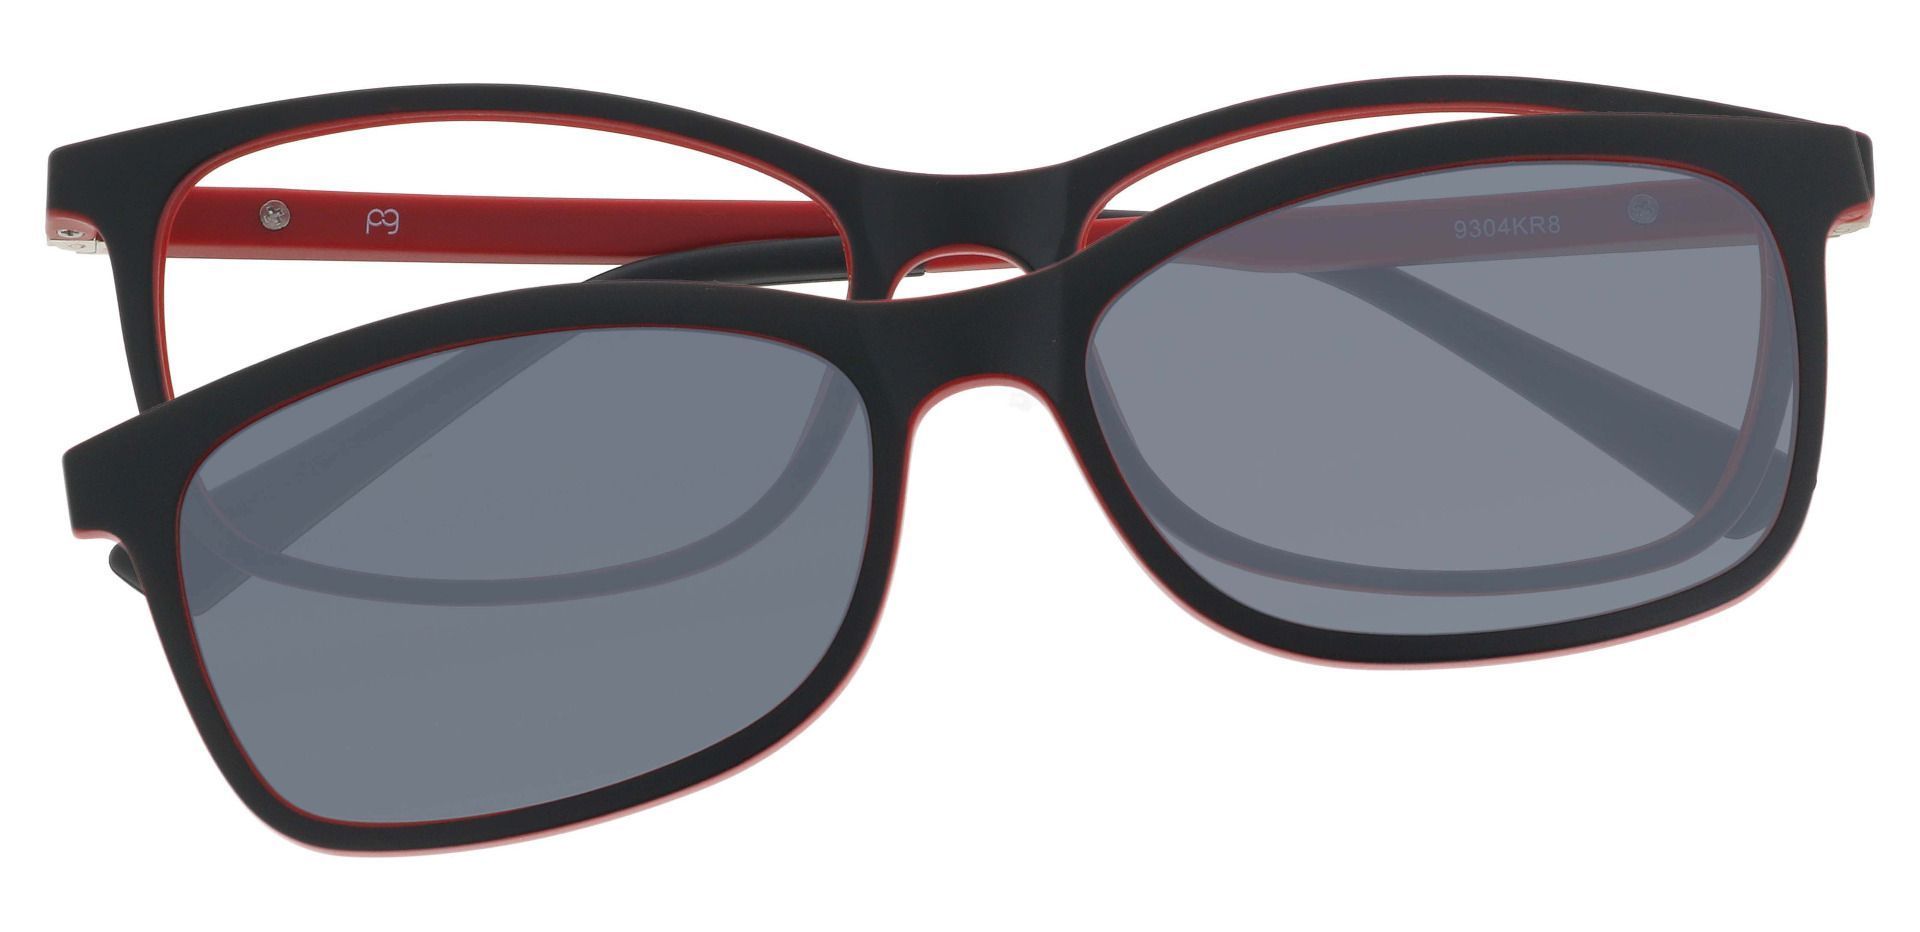 Segura Oval Reading Glasses - Red